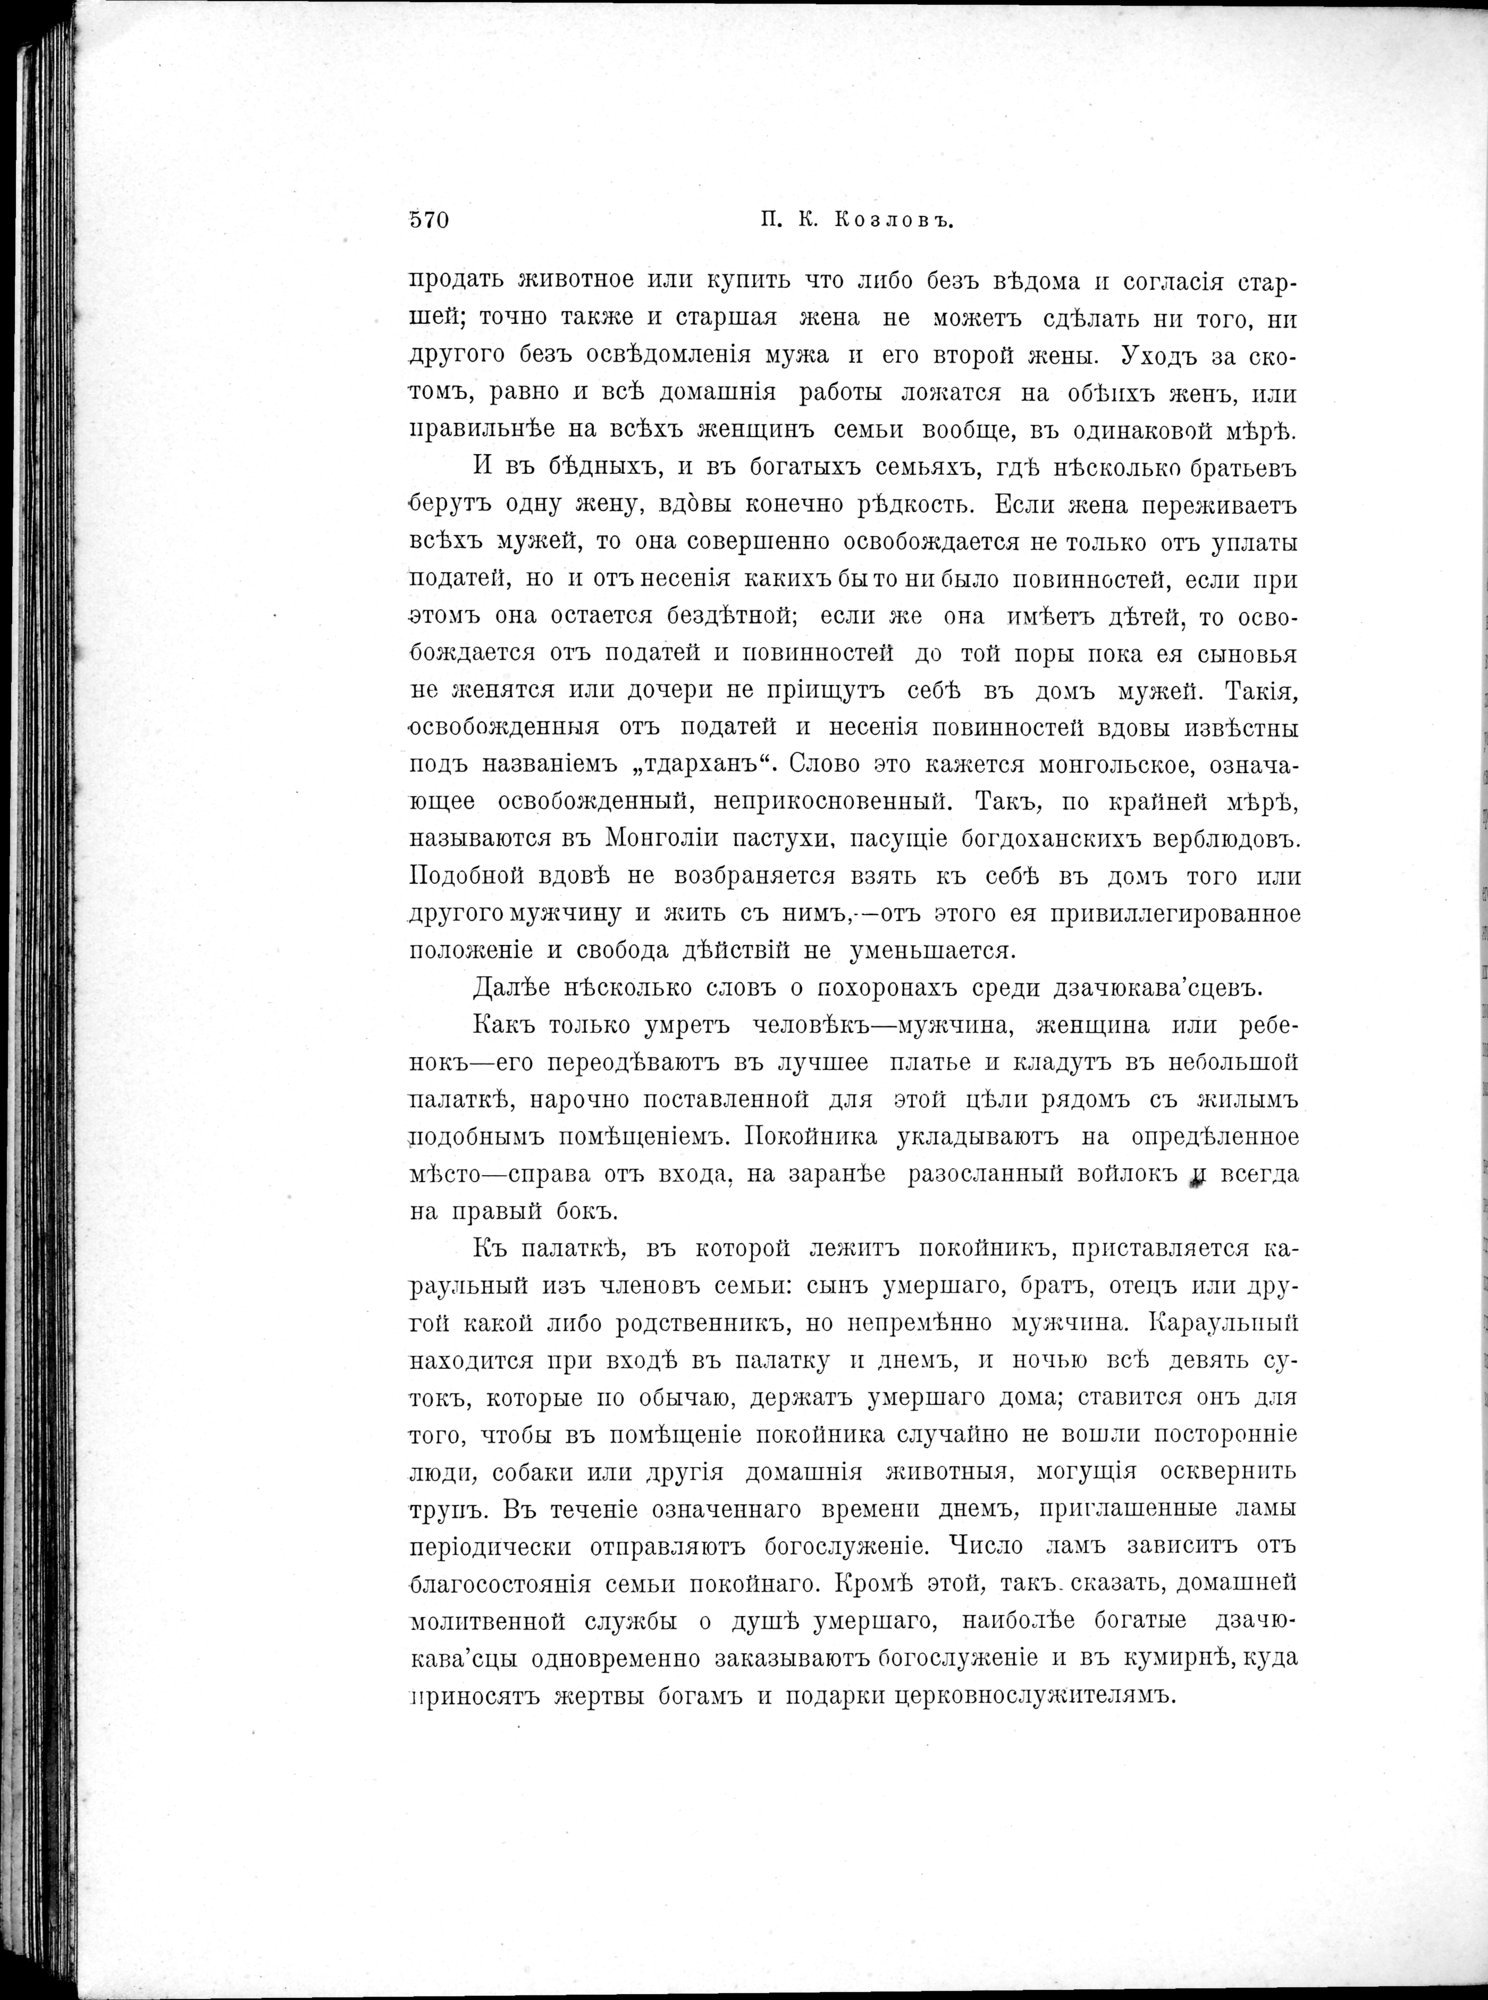 Mongoliia i Kam : vol.2 / Page 394 (Grayscale High Resolution Image)